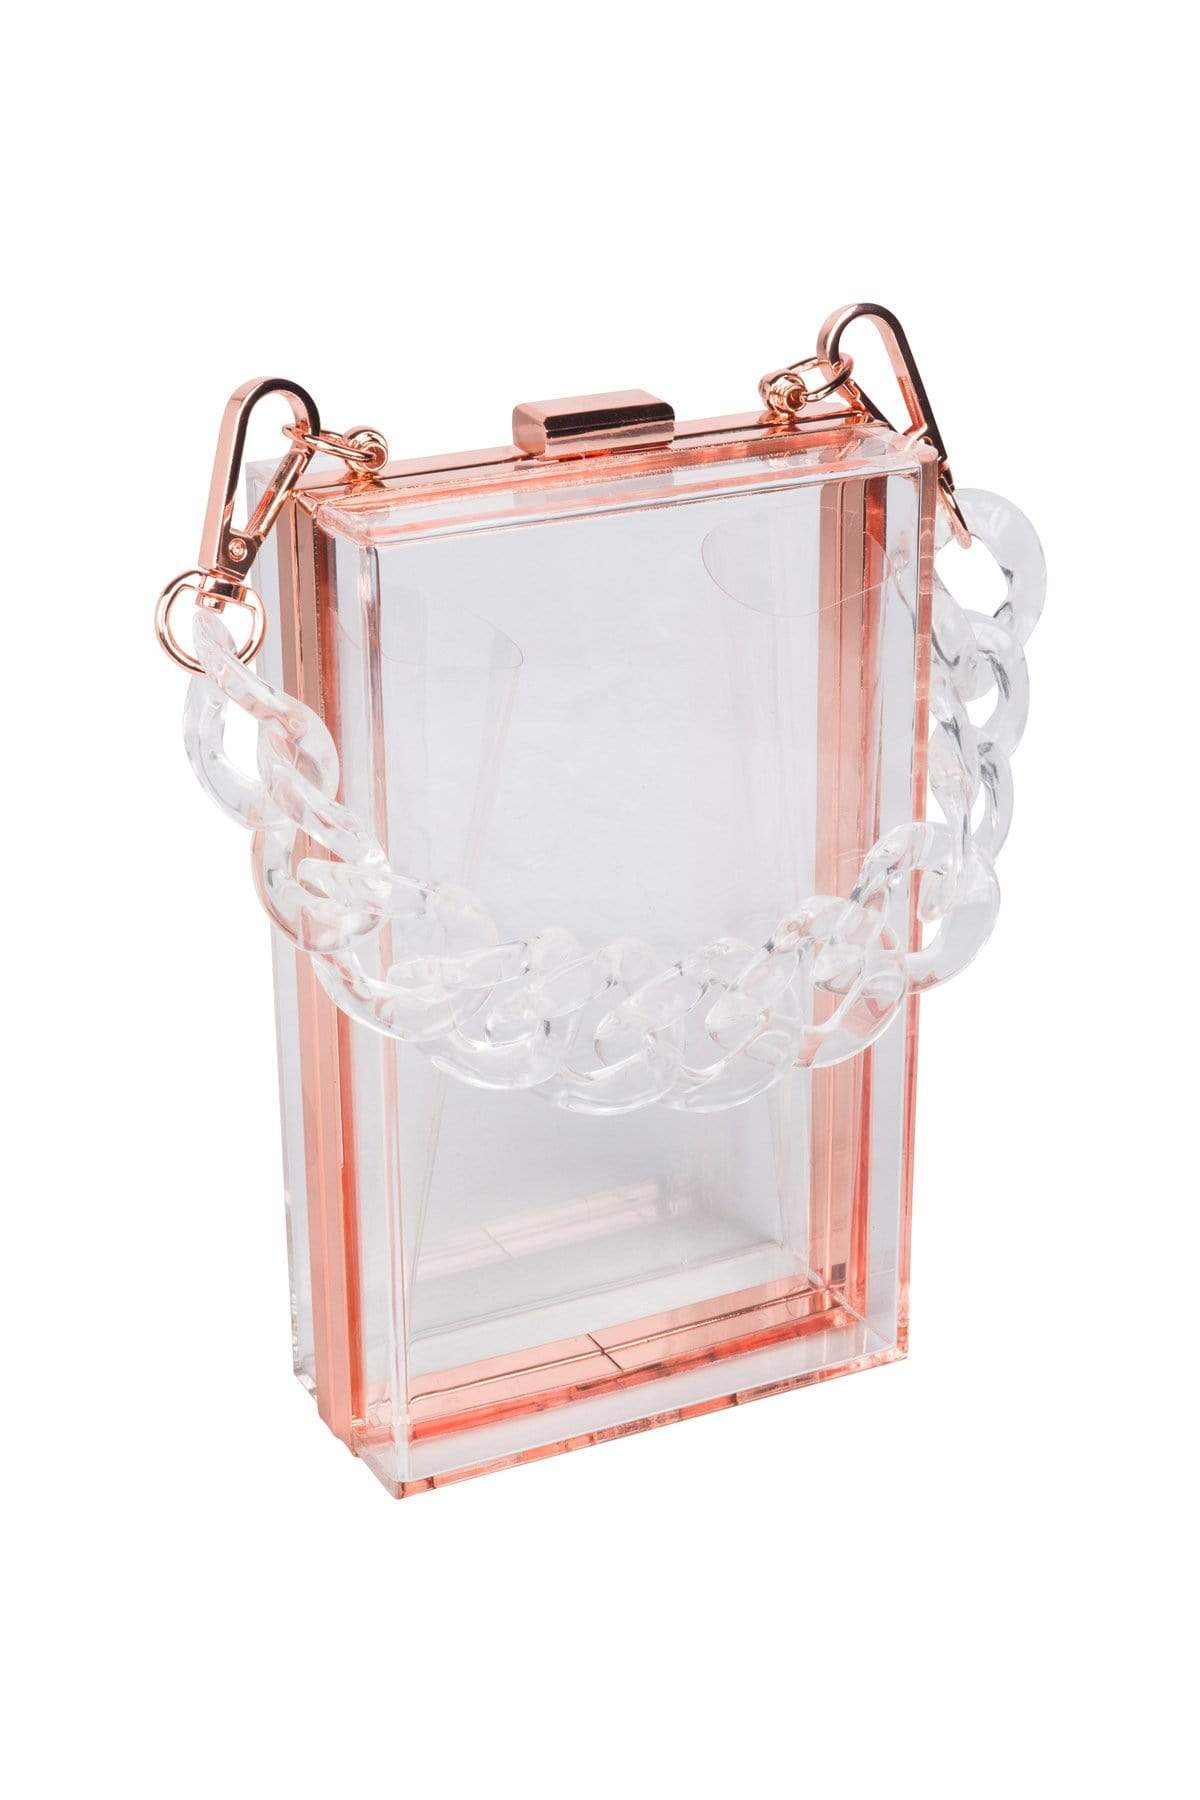 Premium Transparent Clear Acrylic Hard Box Clutch Bag Handbag